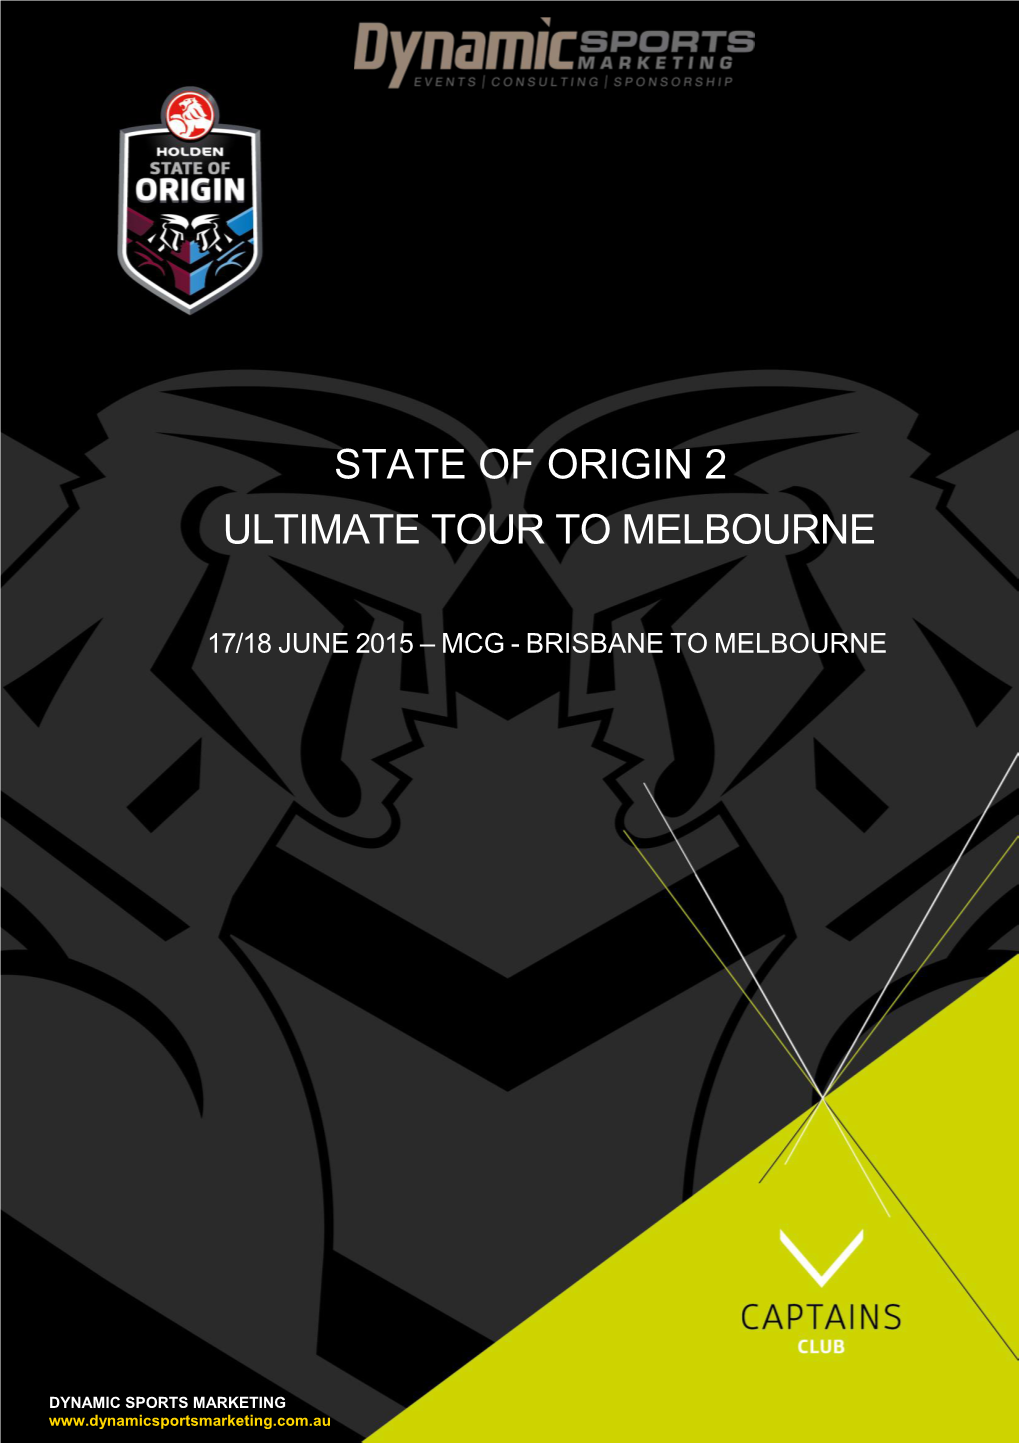 State of Origin 2 Ultimate Tour to Melbourne